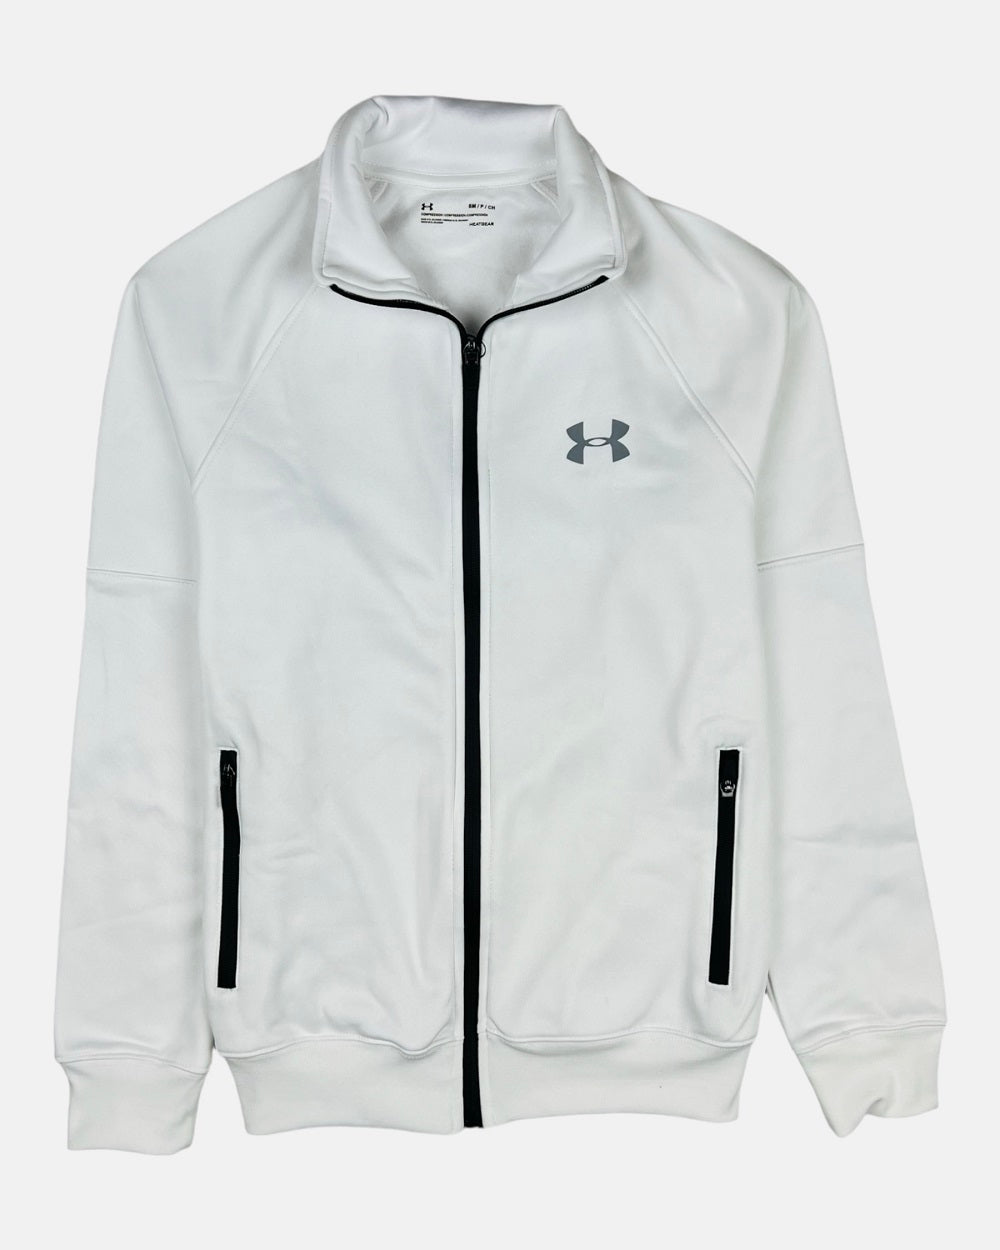 UA Imported polyester Fleece Tracksuit (White & Black)